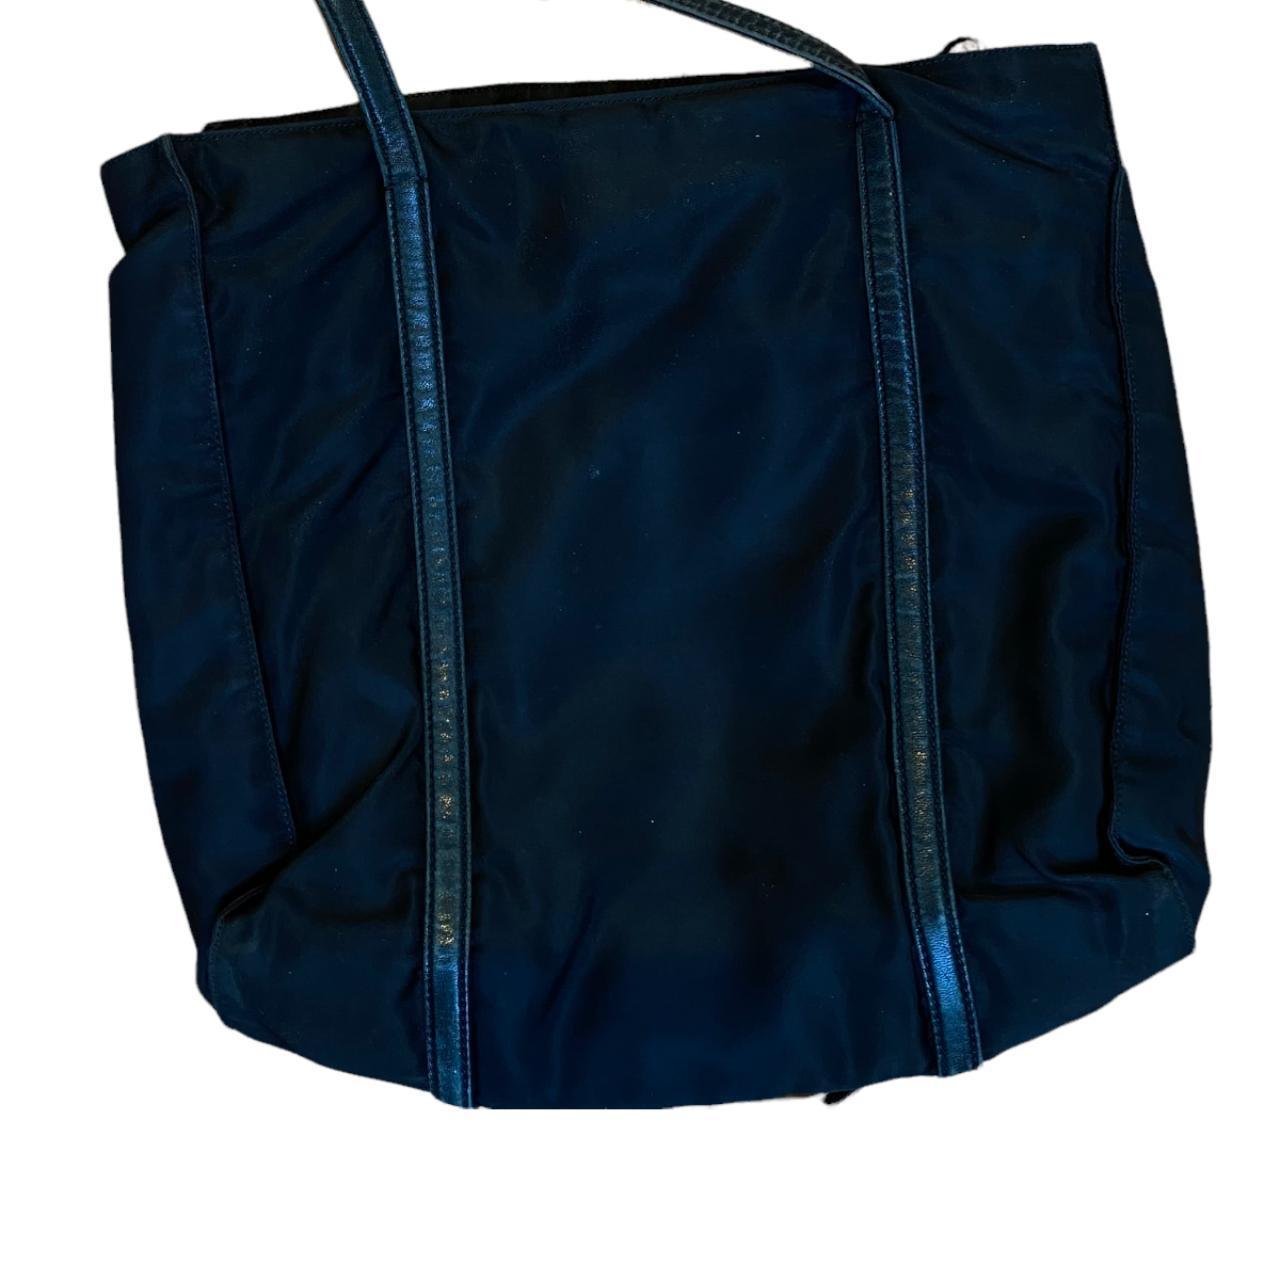 Authentic Prada nylon Black tote bag - Known Source